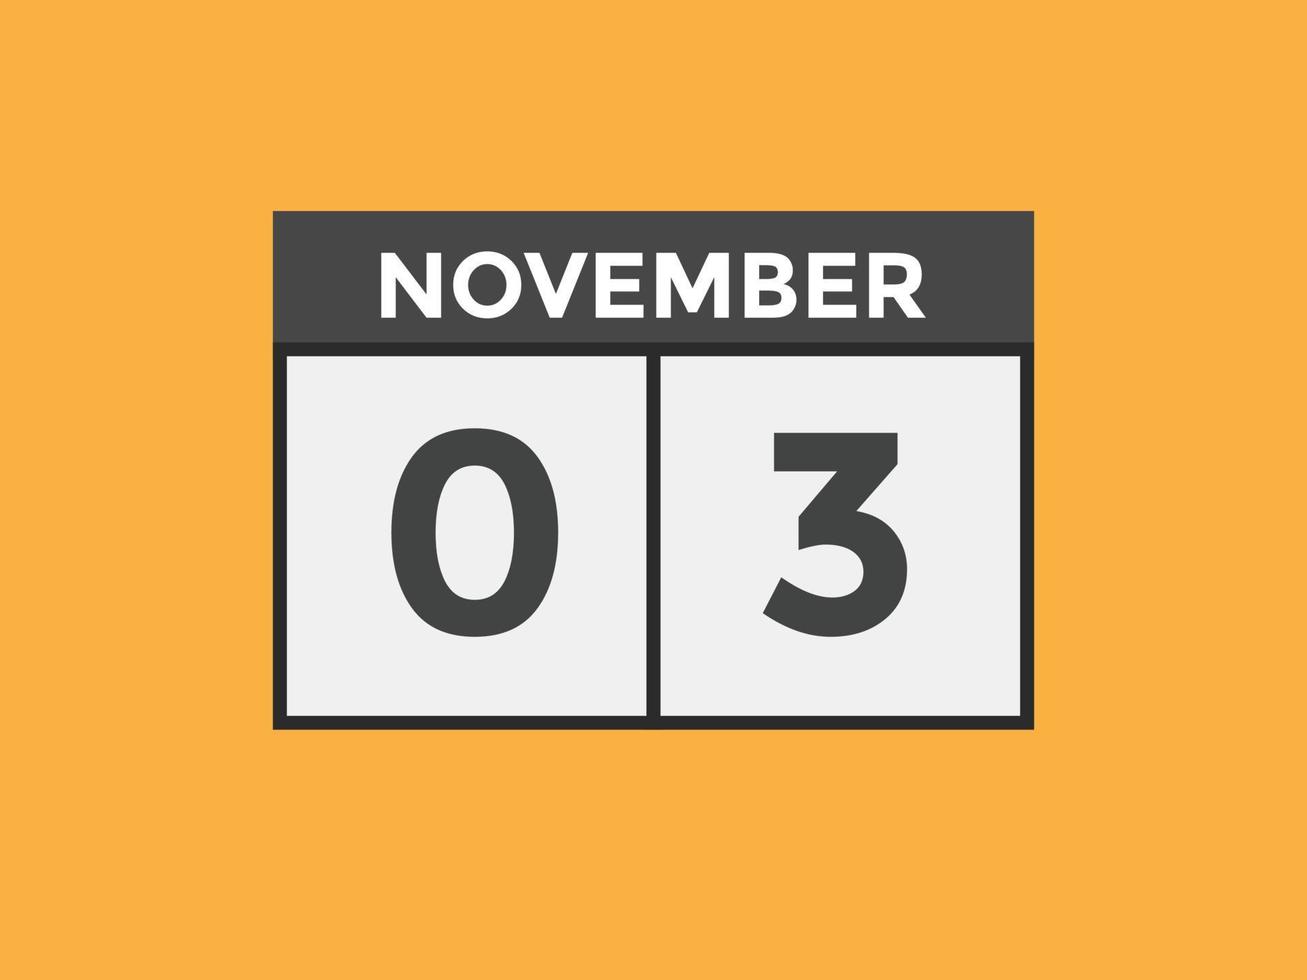 november 3 kalender herinnering. 3e november dagelijks kalender icoon sjabloon. kalender 3e november icoon ontwerp sjabloon. vector illustratie